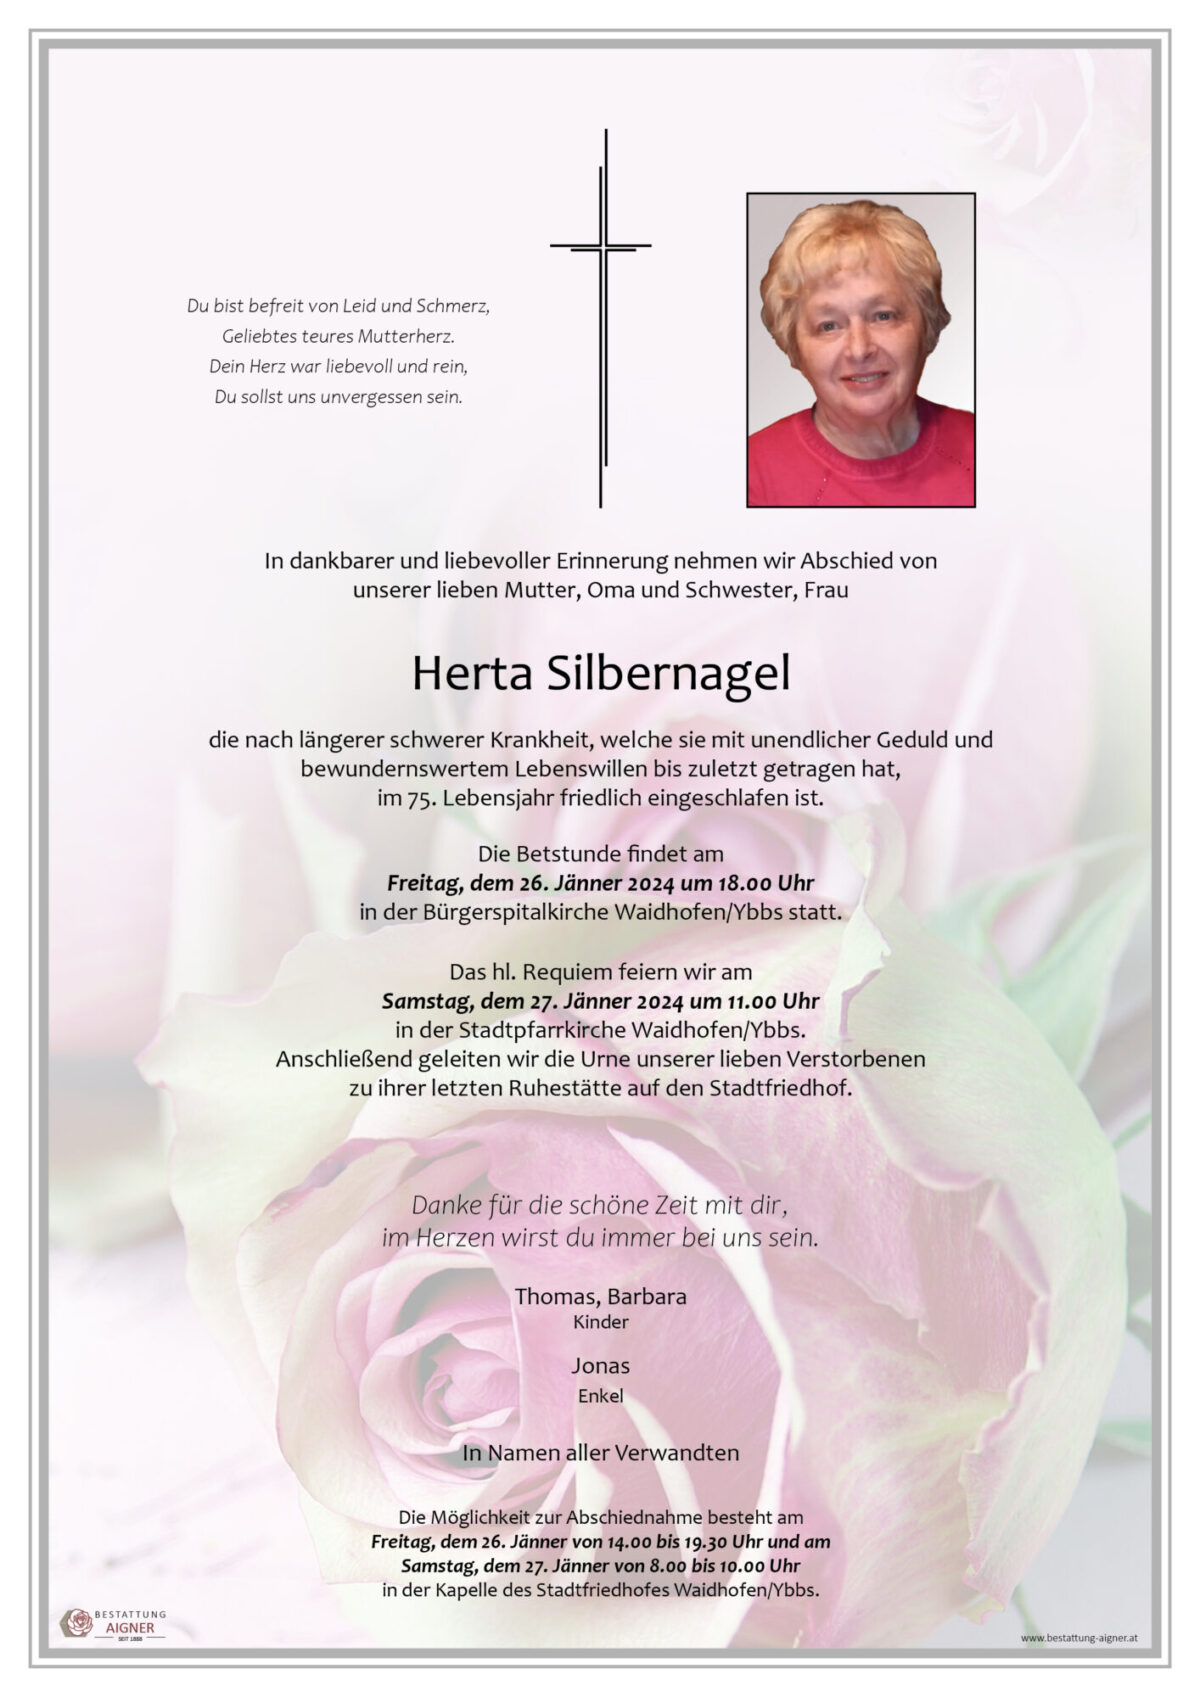 Herta Silbernagel